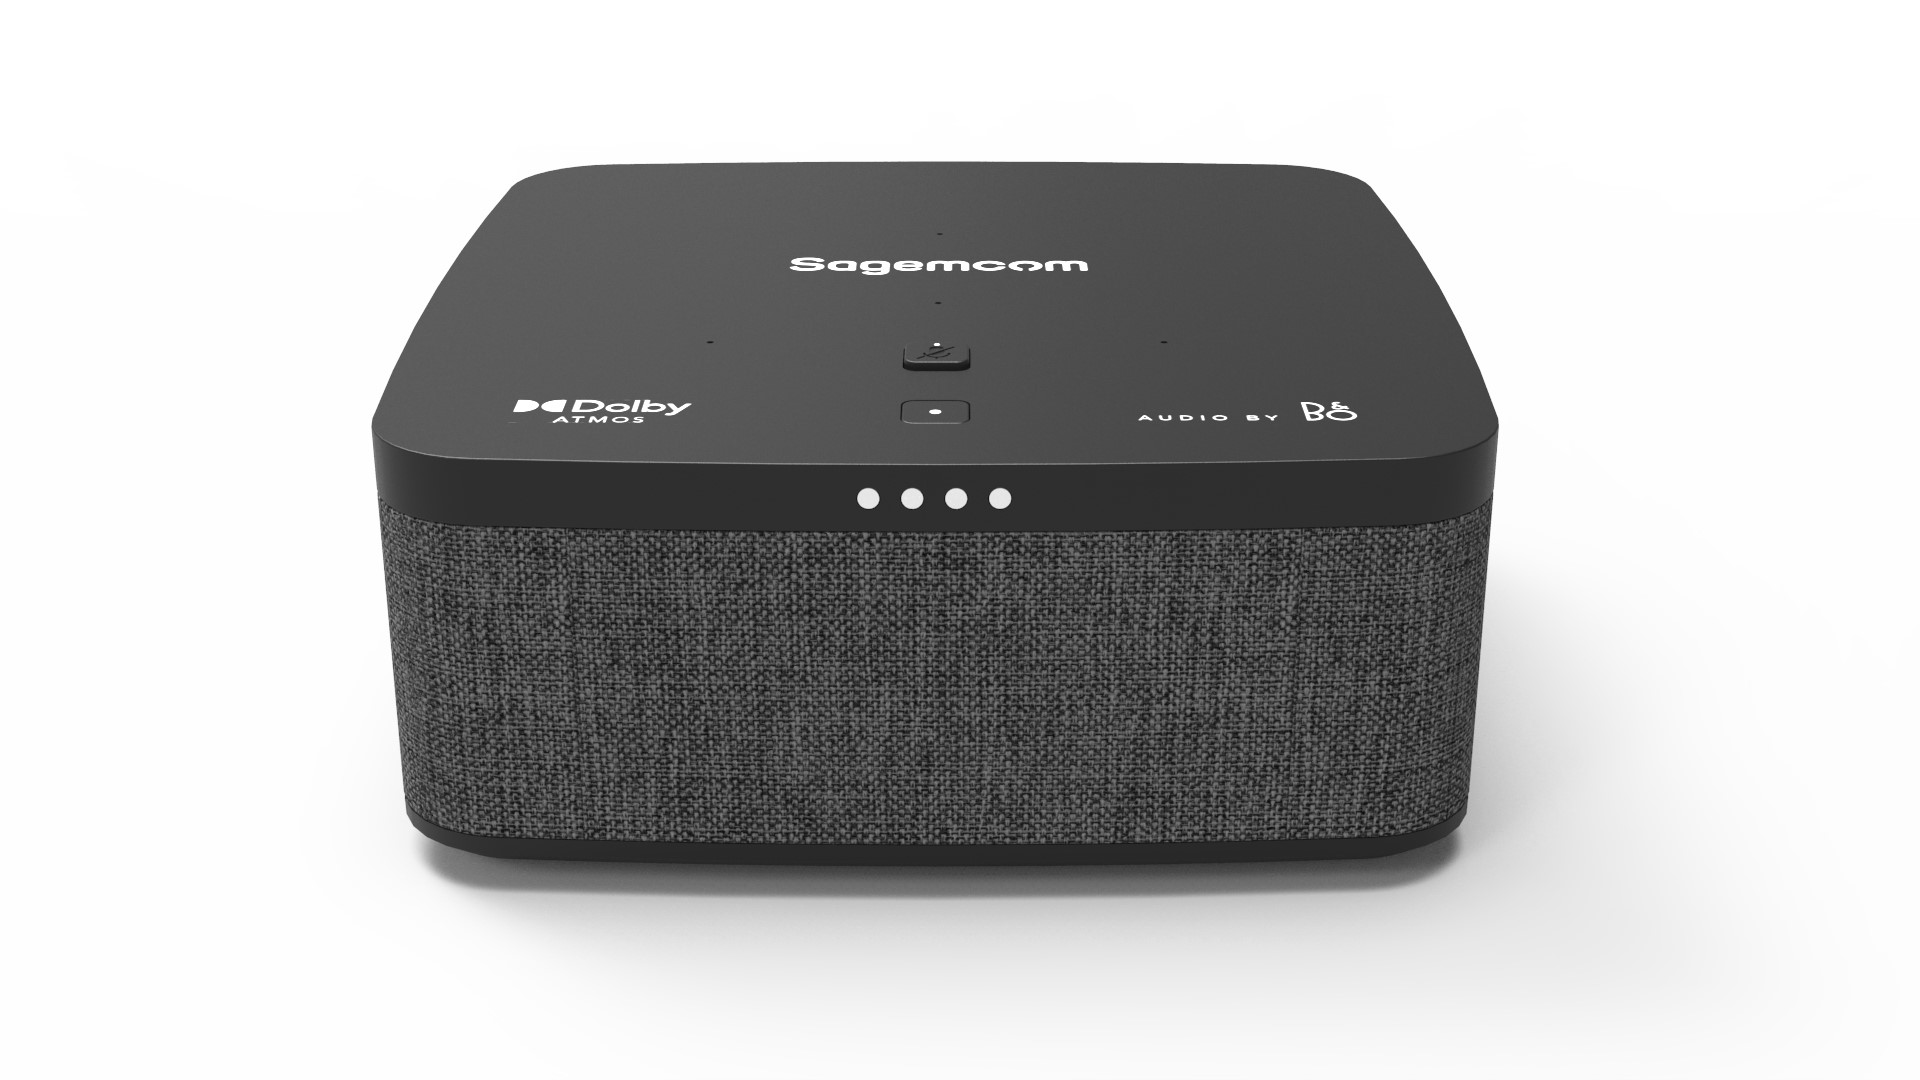 sagemcom’s-new-set-top-box-and-streamer-has-dolby-atmos-sound-by-b&o